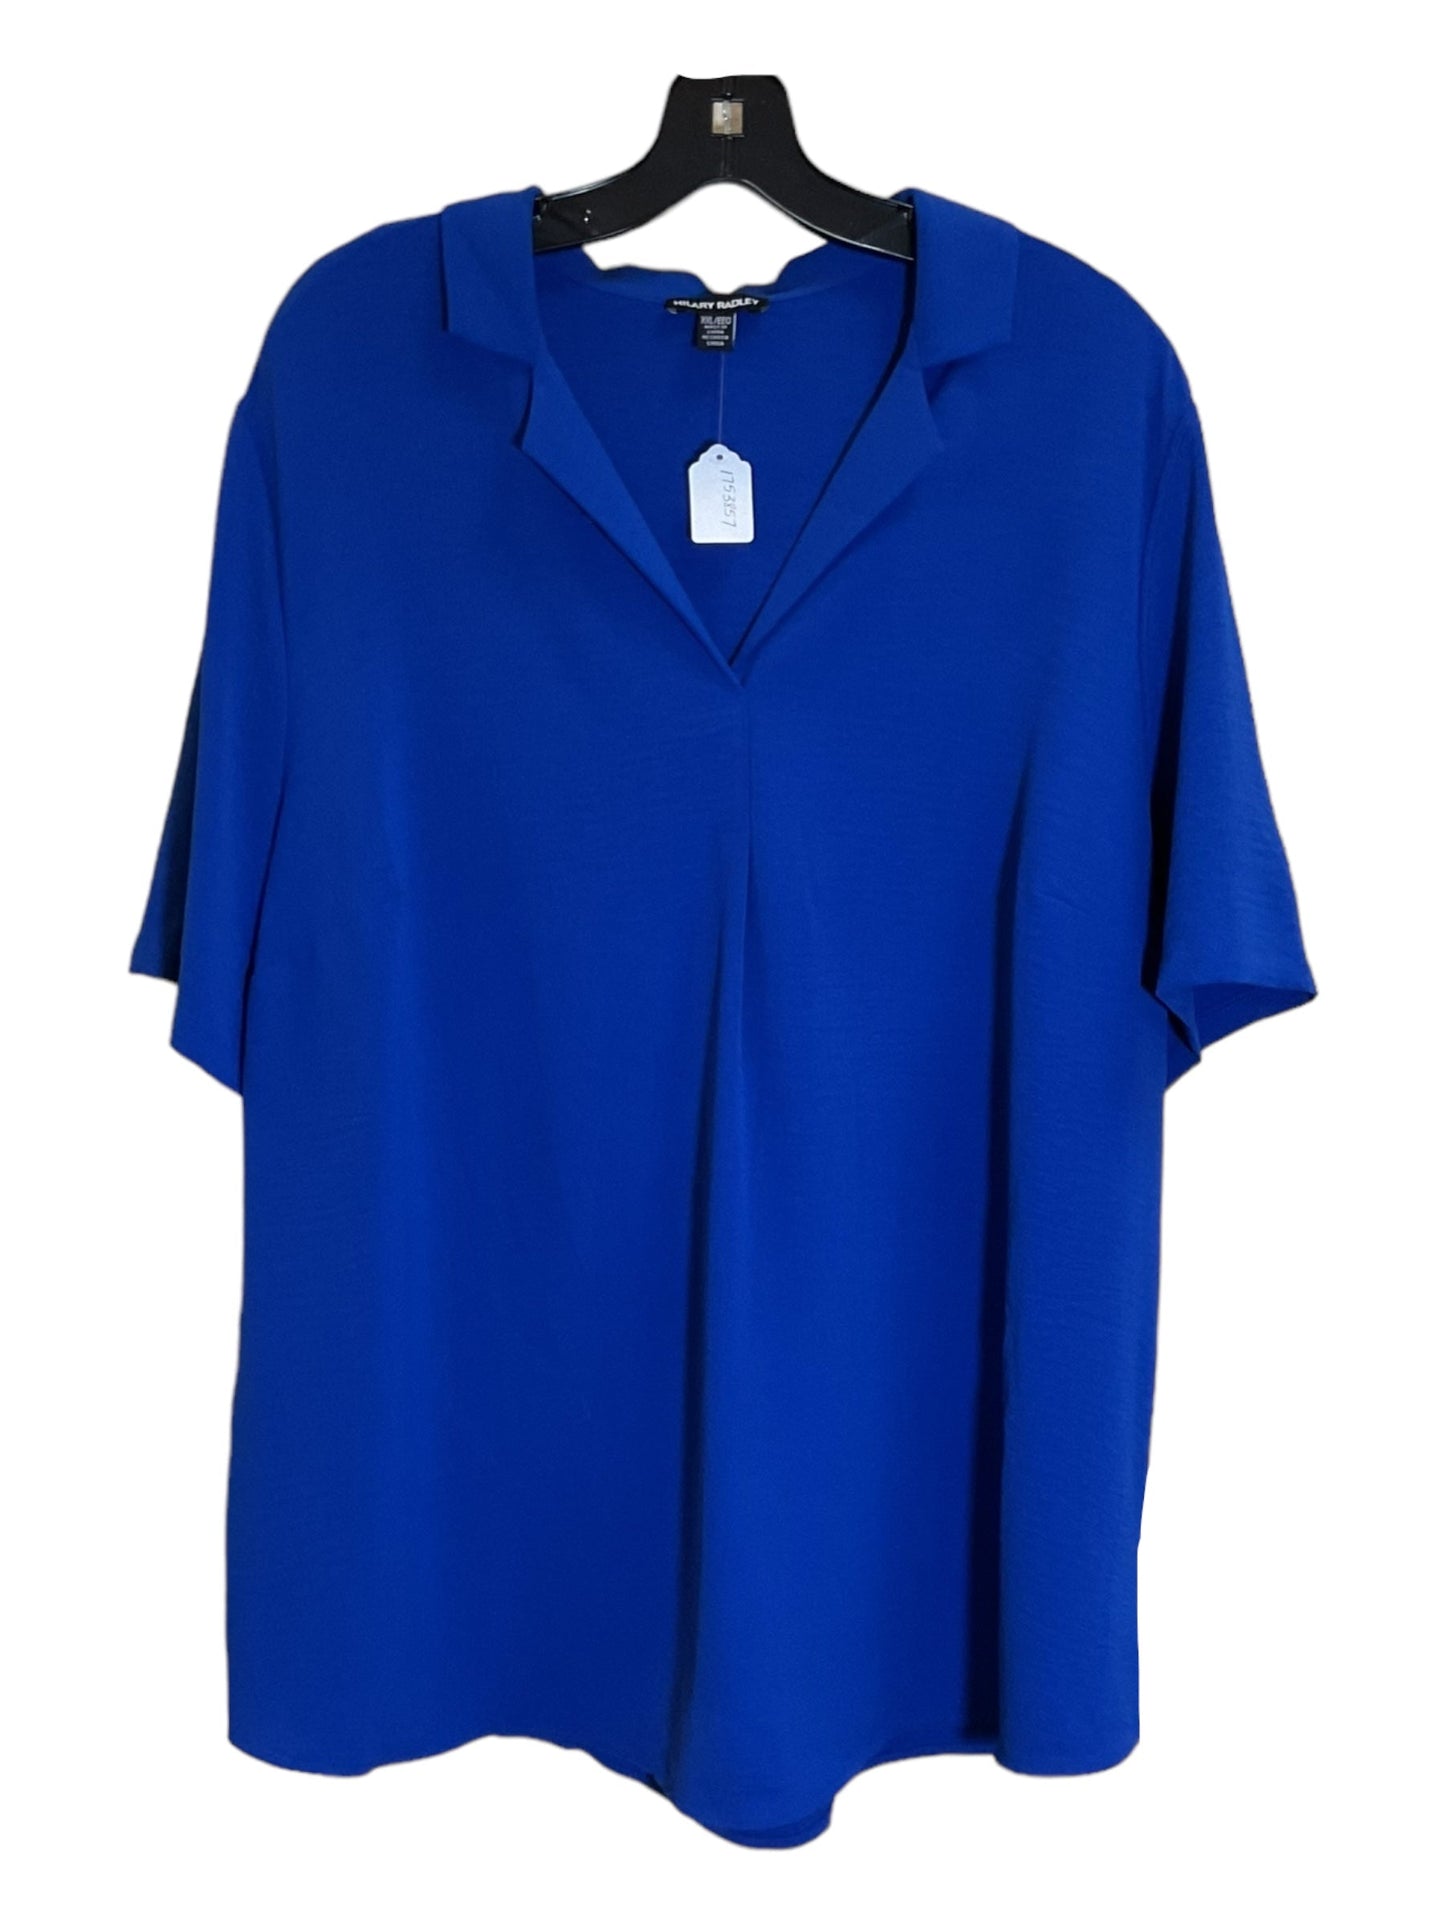 Blue Top Short Sleeve Hilary Radley, Size 1x